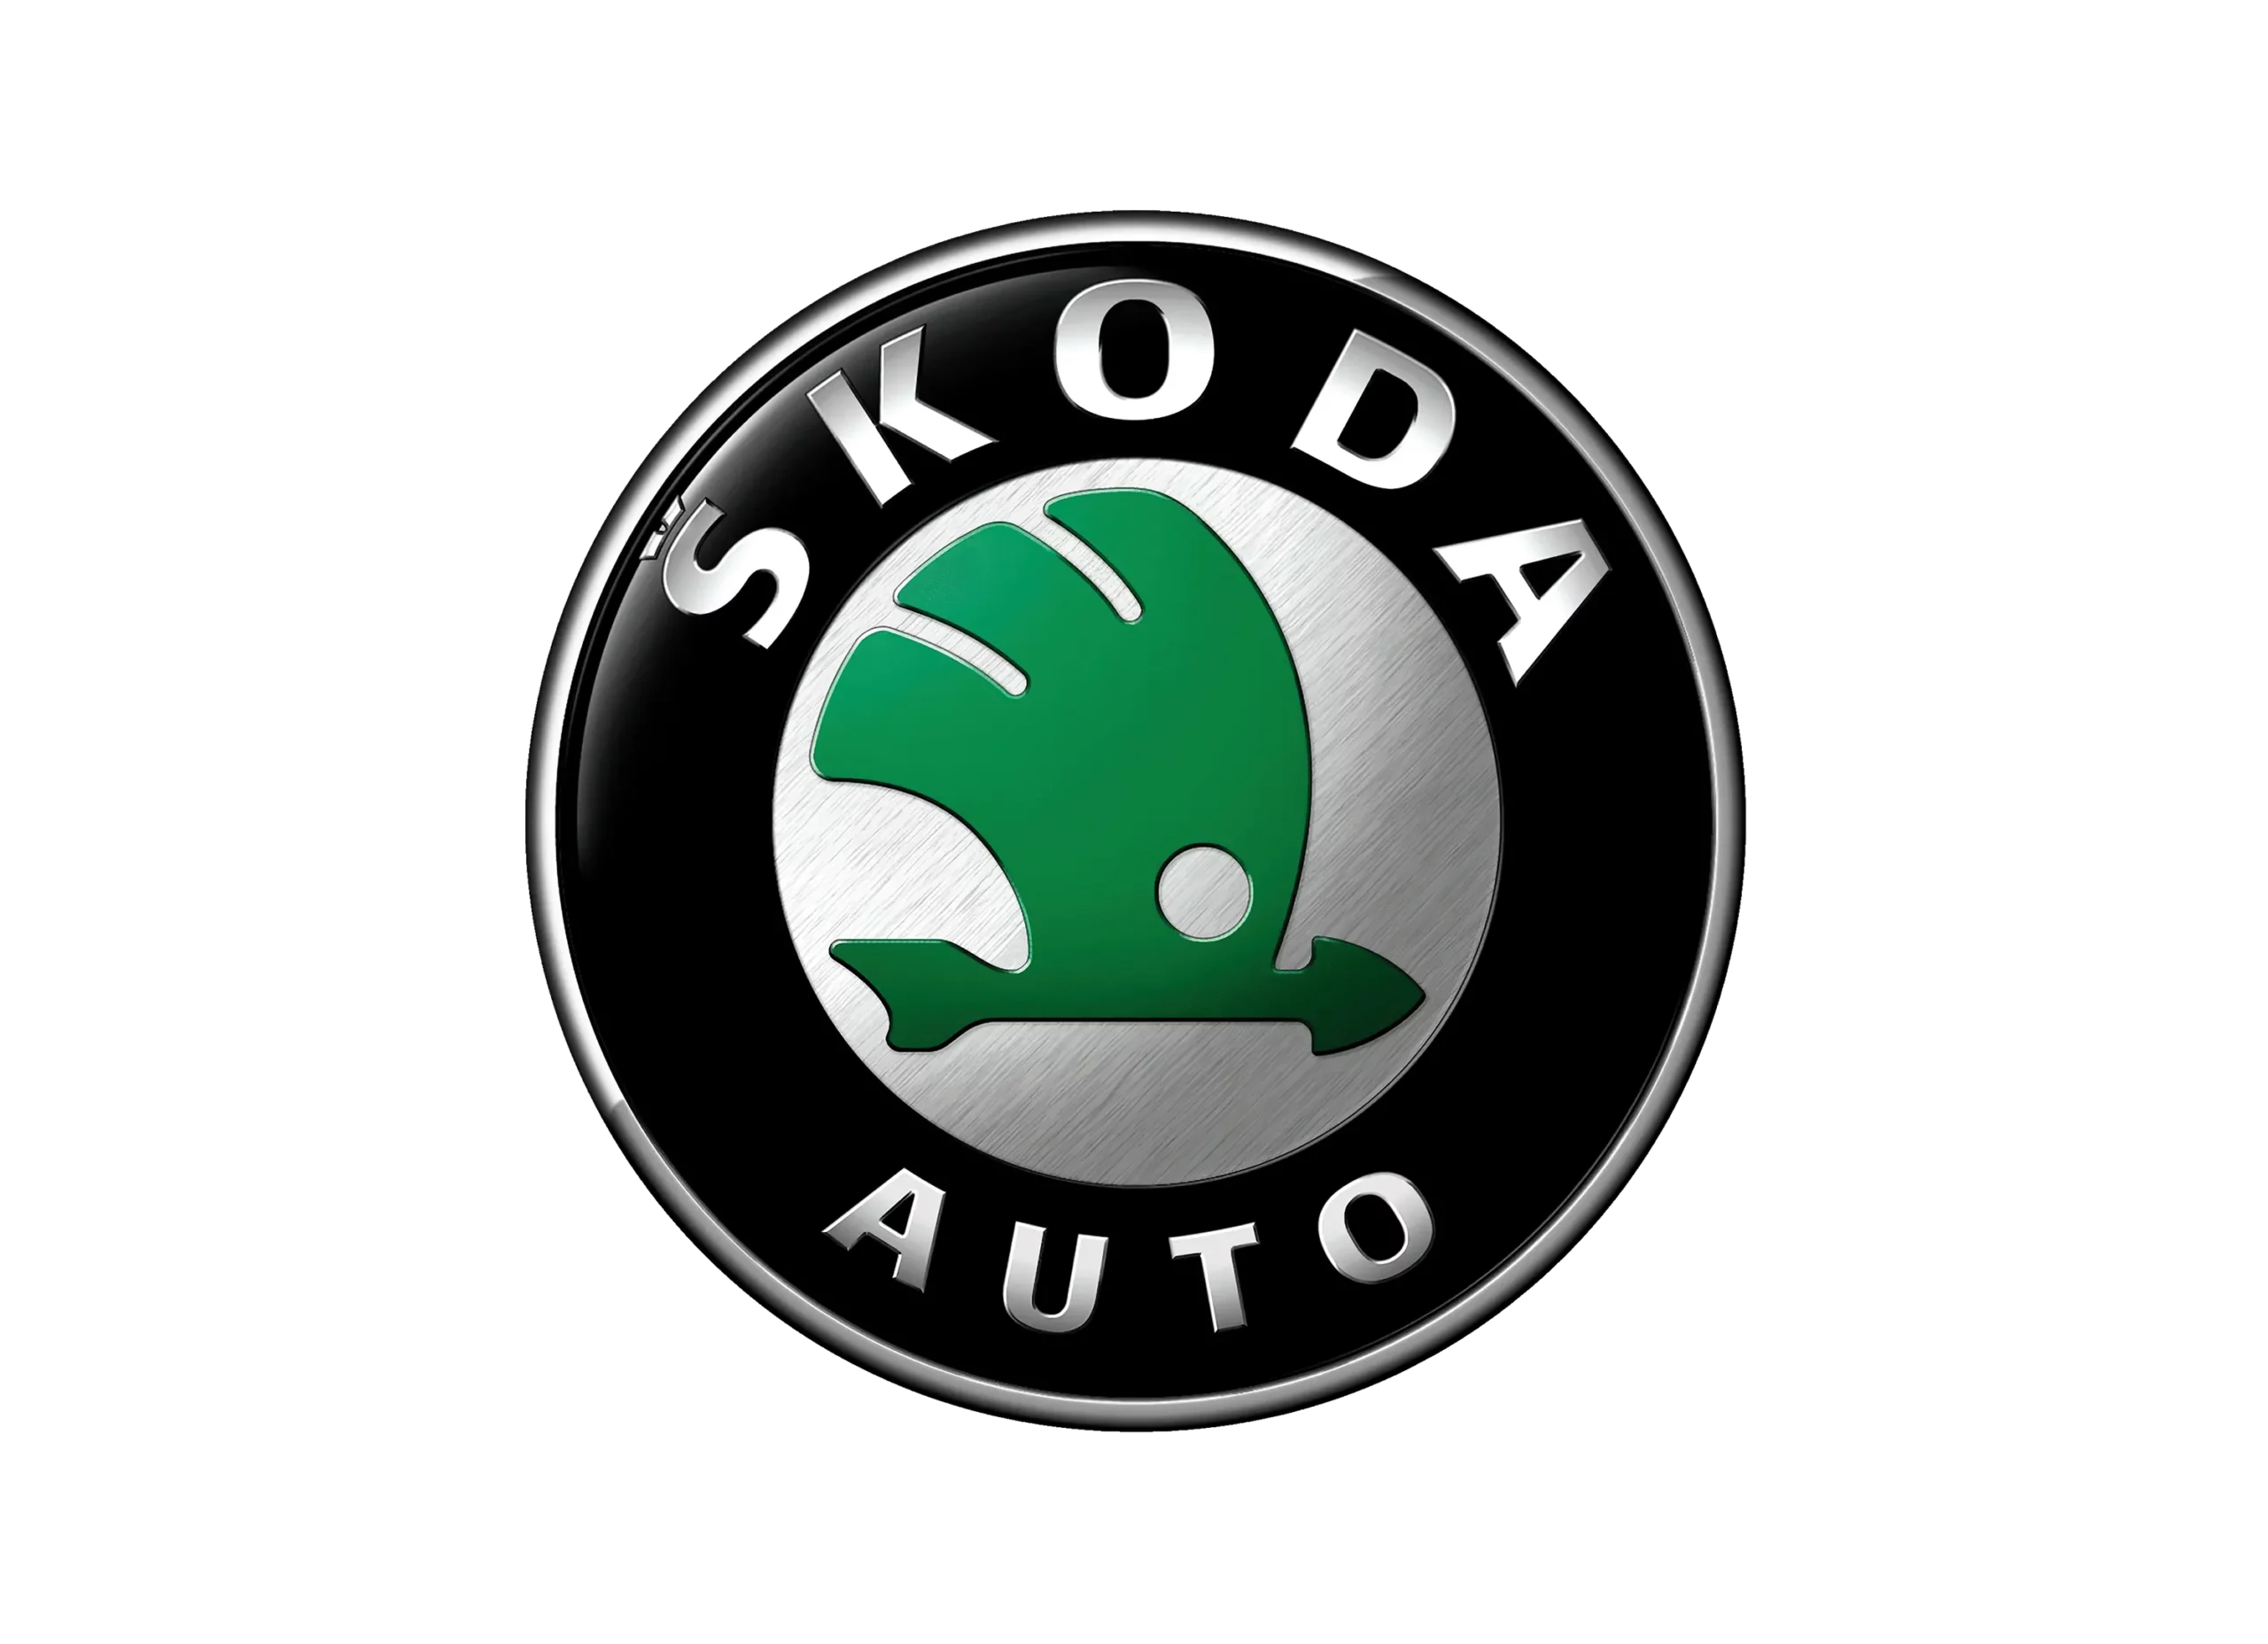 Skoda logo 1999-2011